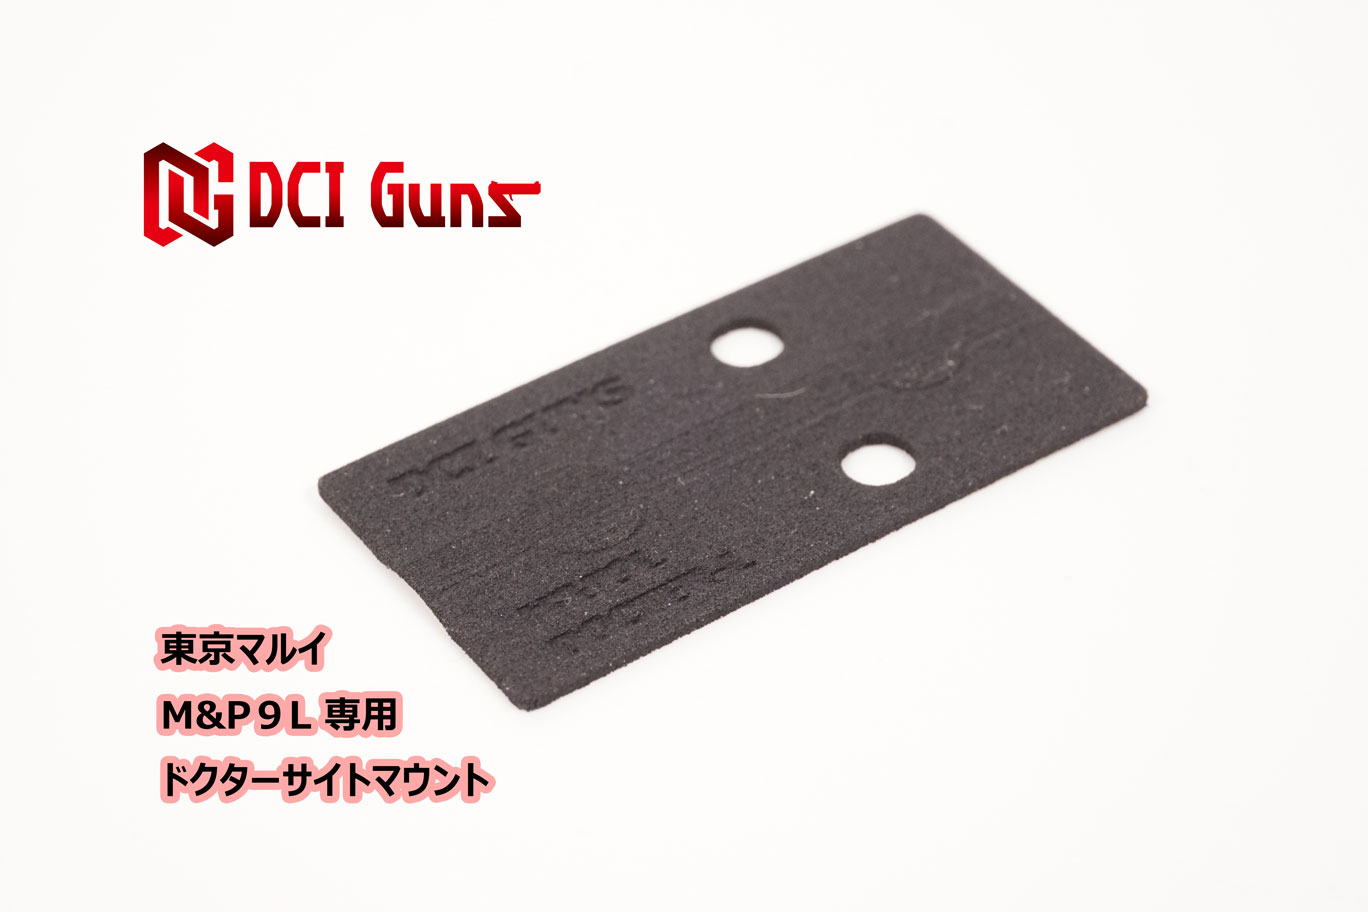 DCI Guns 東京マルイ M&P9L用ドクターサイトマウントV2.0 エアガン エアーガン ガスガン ブローバック カスタムパーツ ダットサイト ドットサイト 光学機器 スライド 直付け サバゲー サバイバルゲーム マイクロプロサイト